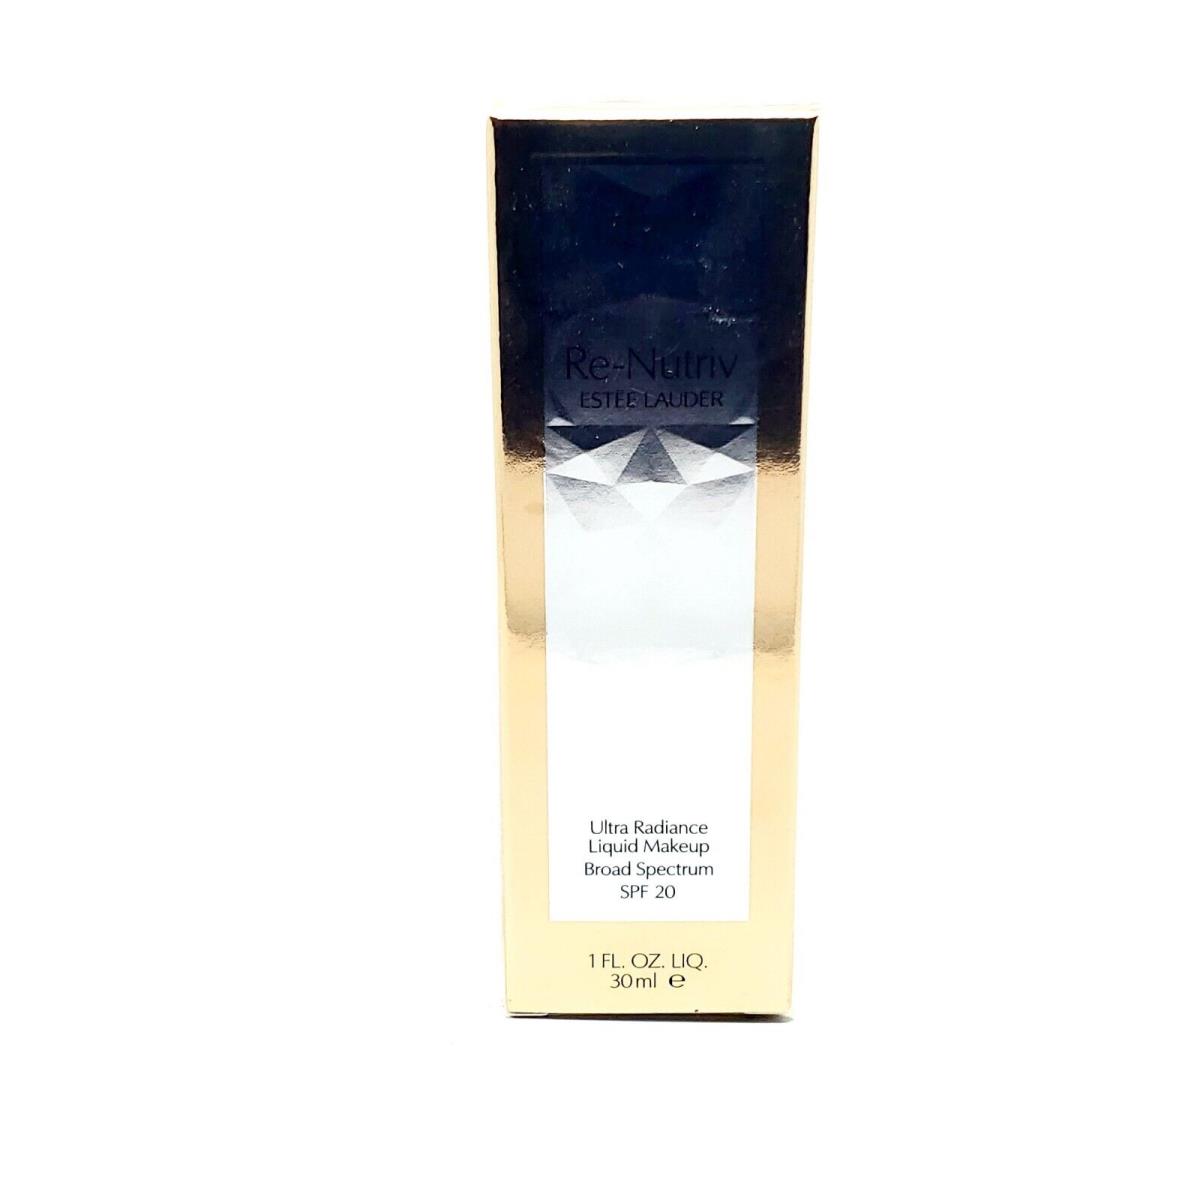 Estee Lauder Re-nutriv Ultra Radiance Liquid Makeup Choose Shade 5W1 Bronze